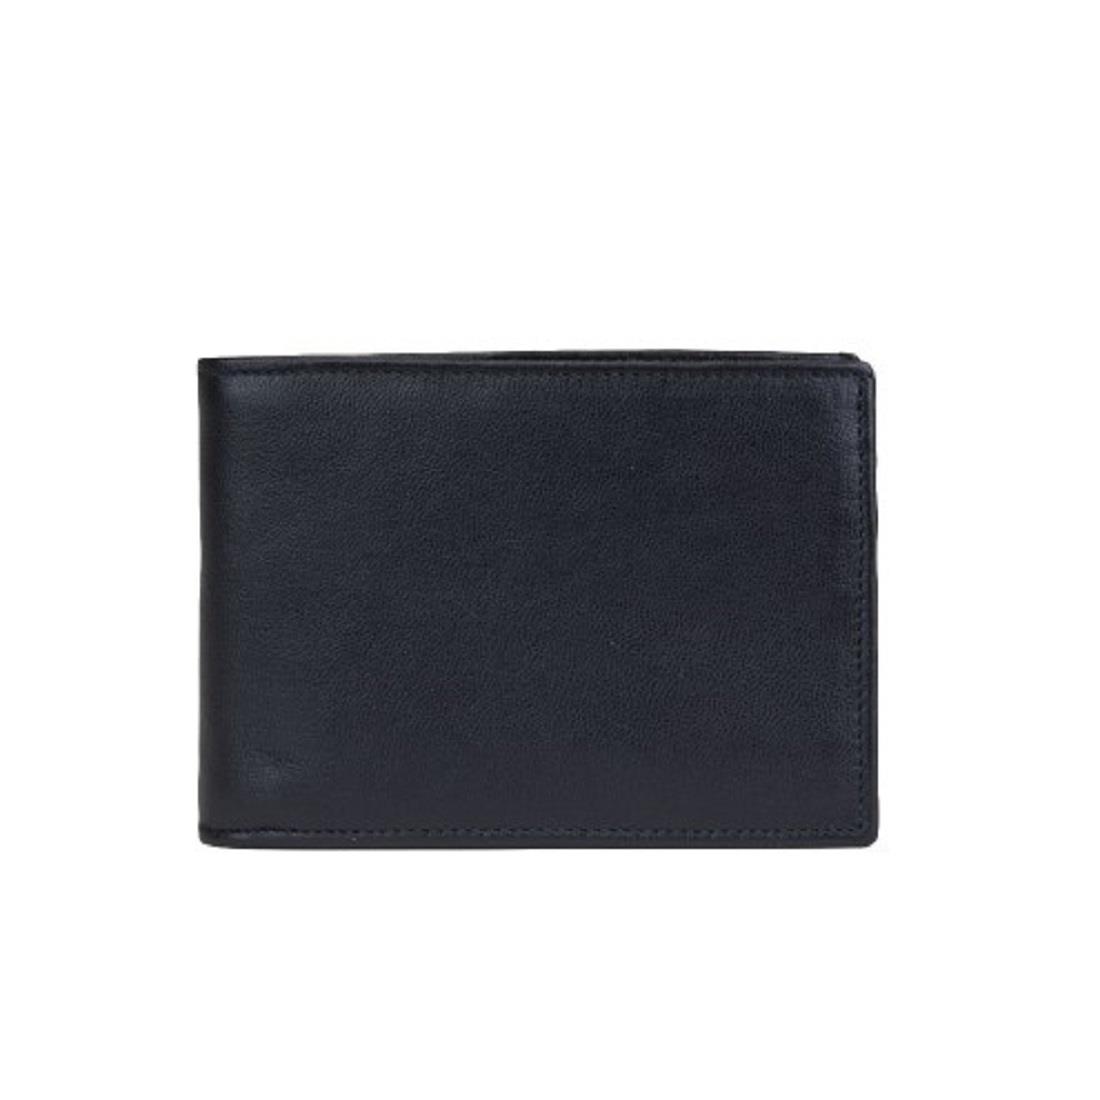 Black leather wallet - PIEROTUCCI